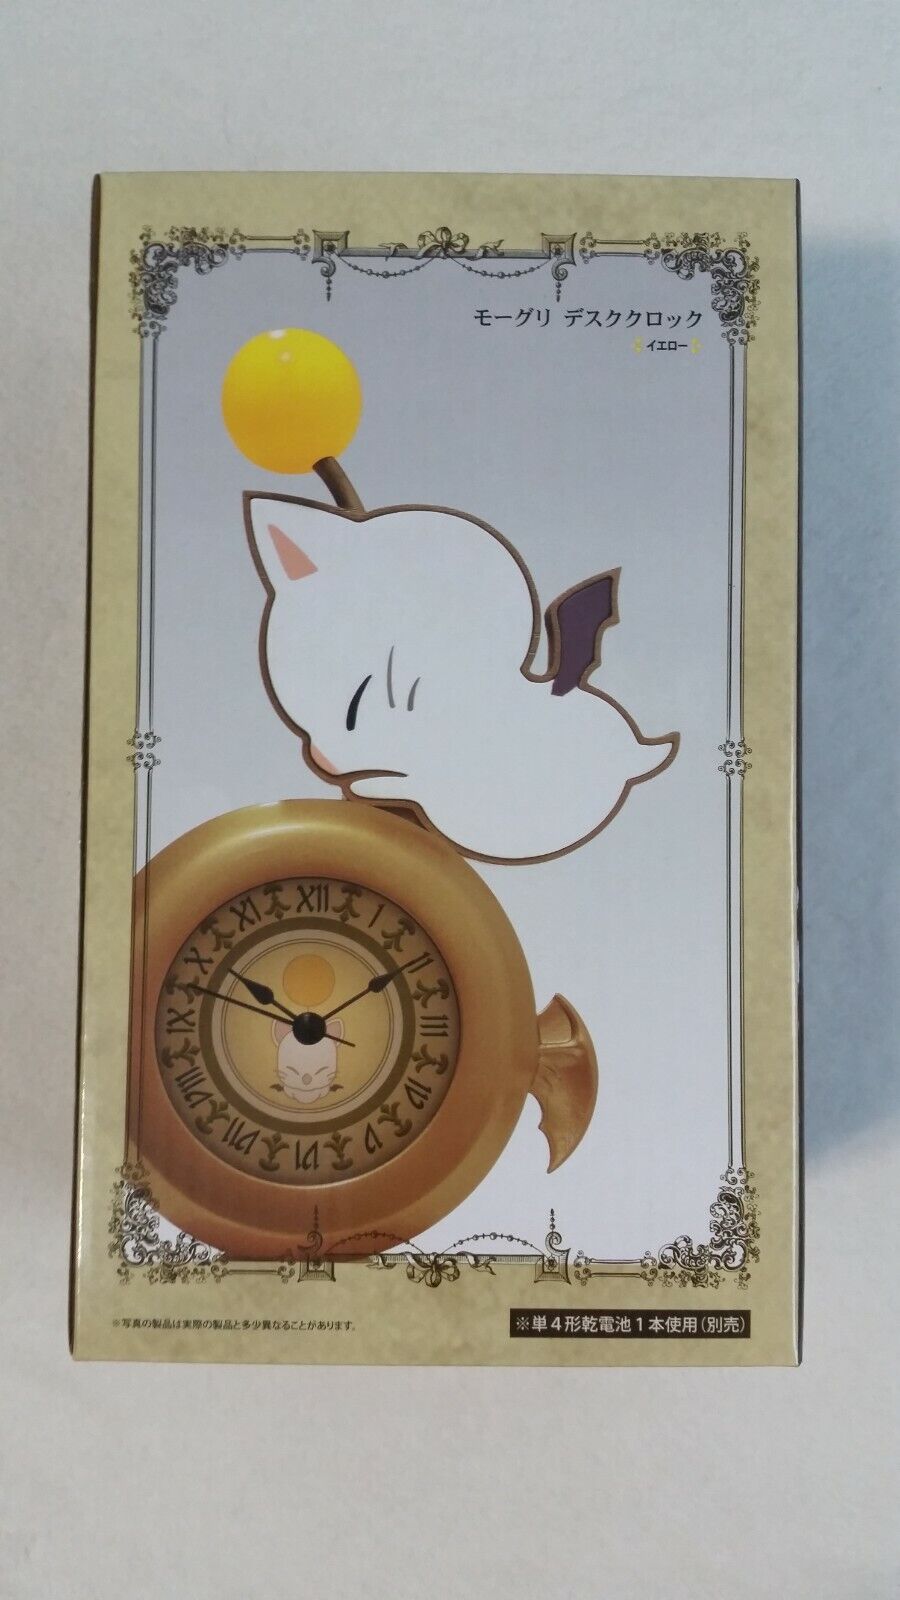 TAITO Final Fantasy XIV Moogle Desk Clock Authentic from Japan